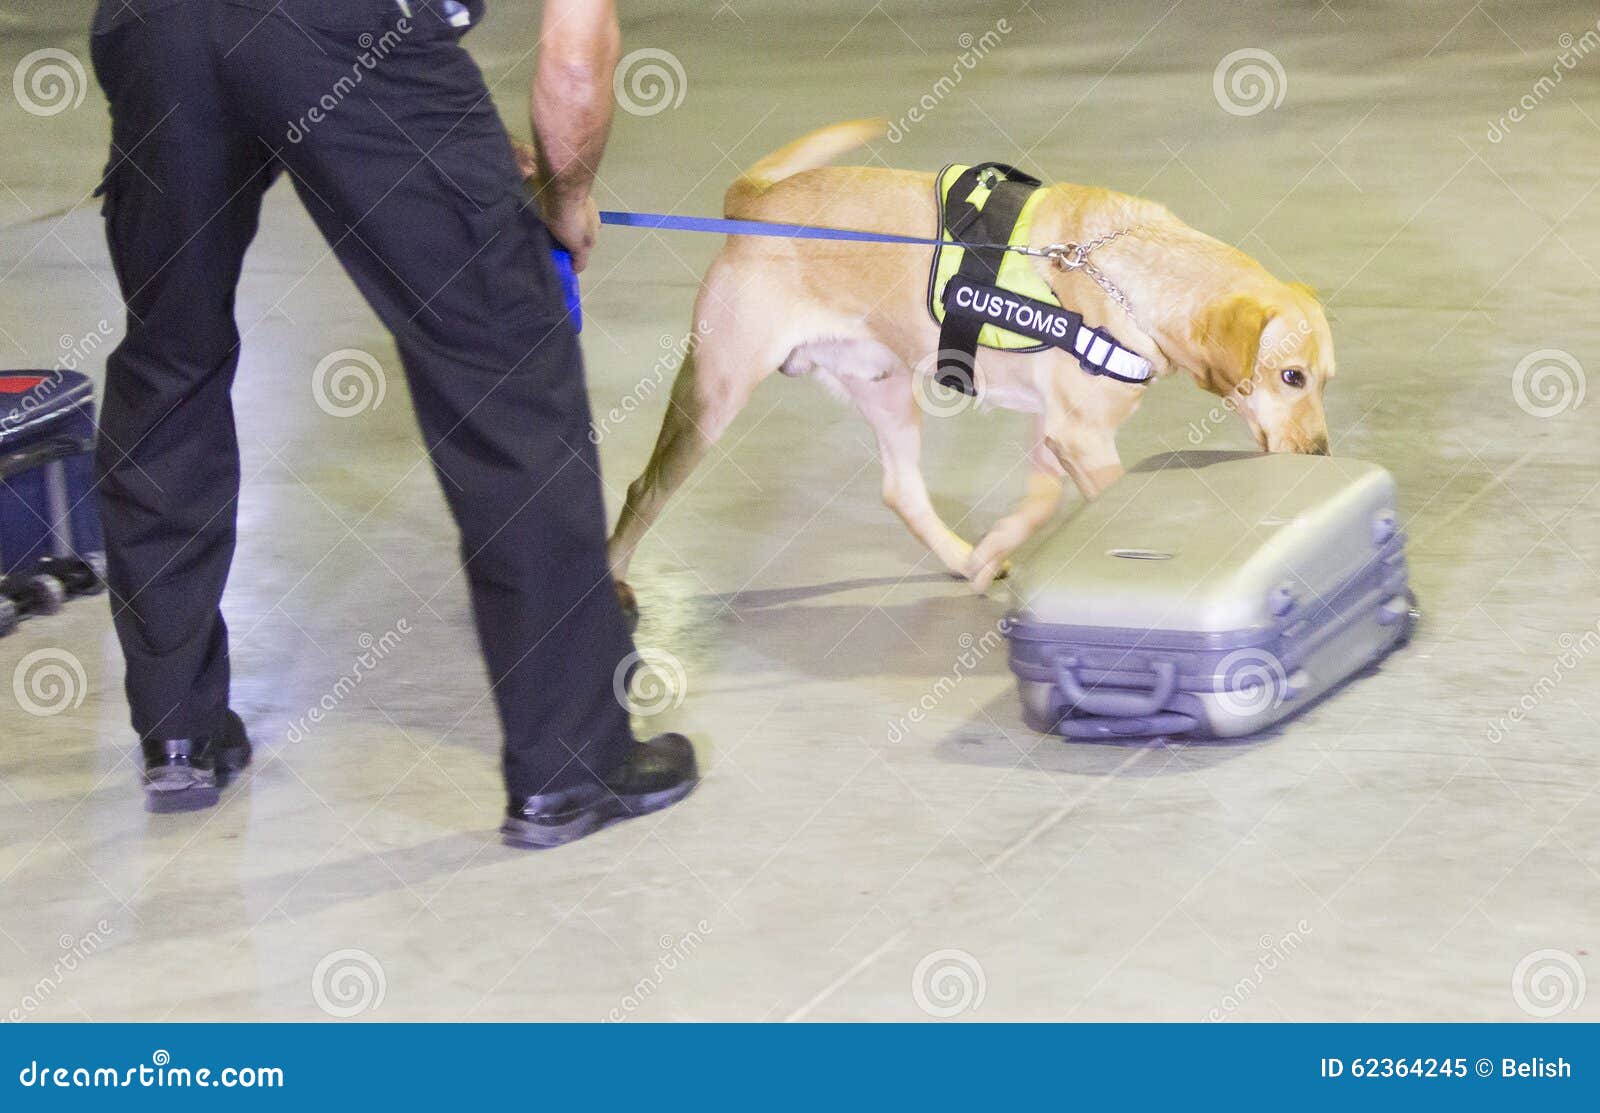 customs drugs detection dog